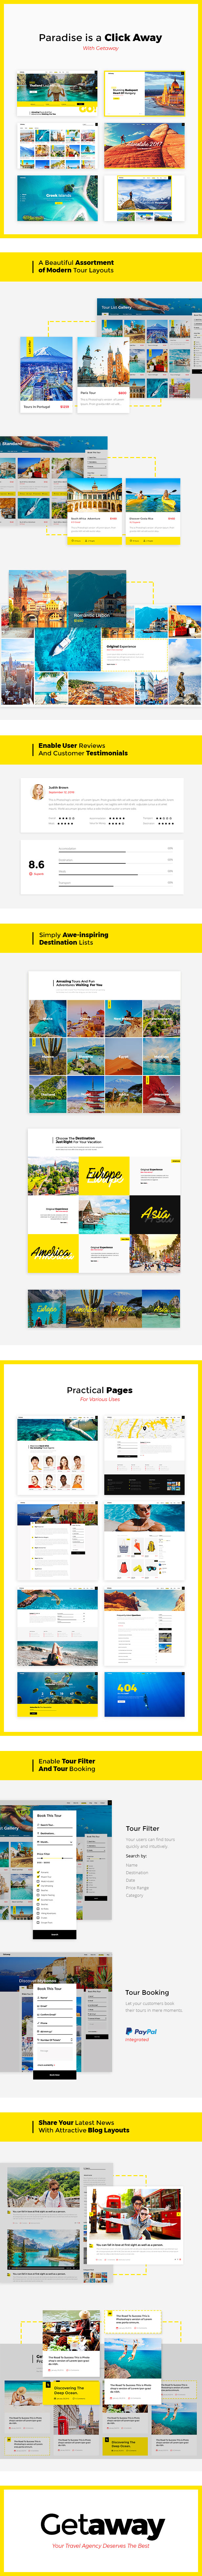 WordPress theme Getaway - An Upbeat Travel and Tourism Theme (Travel)